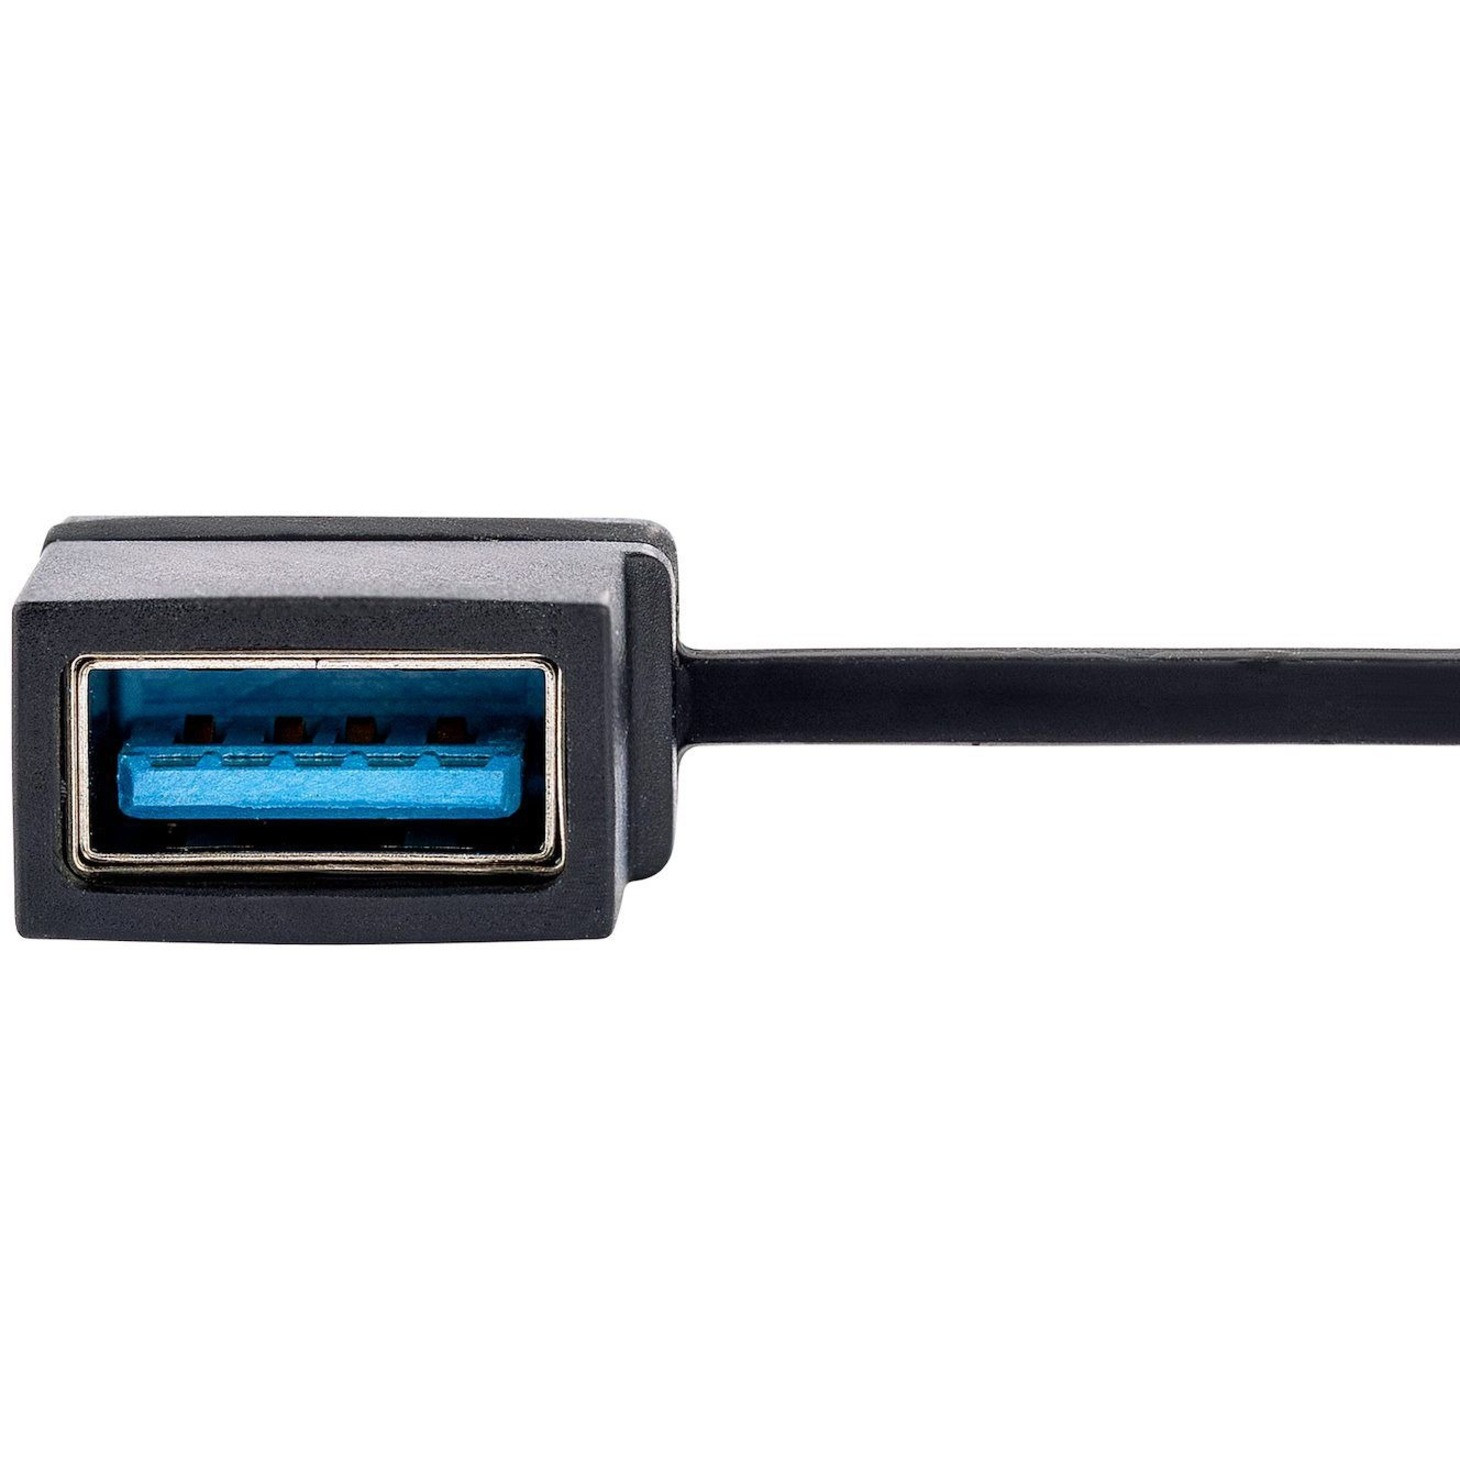 Startech .com USB 3.0 to Dual HDMI Adapter, 1x 4K & 1x 1080p